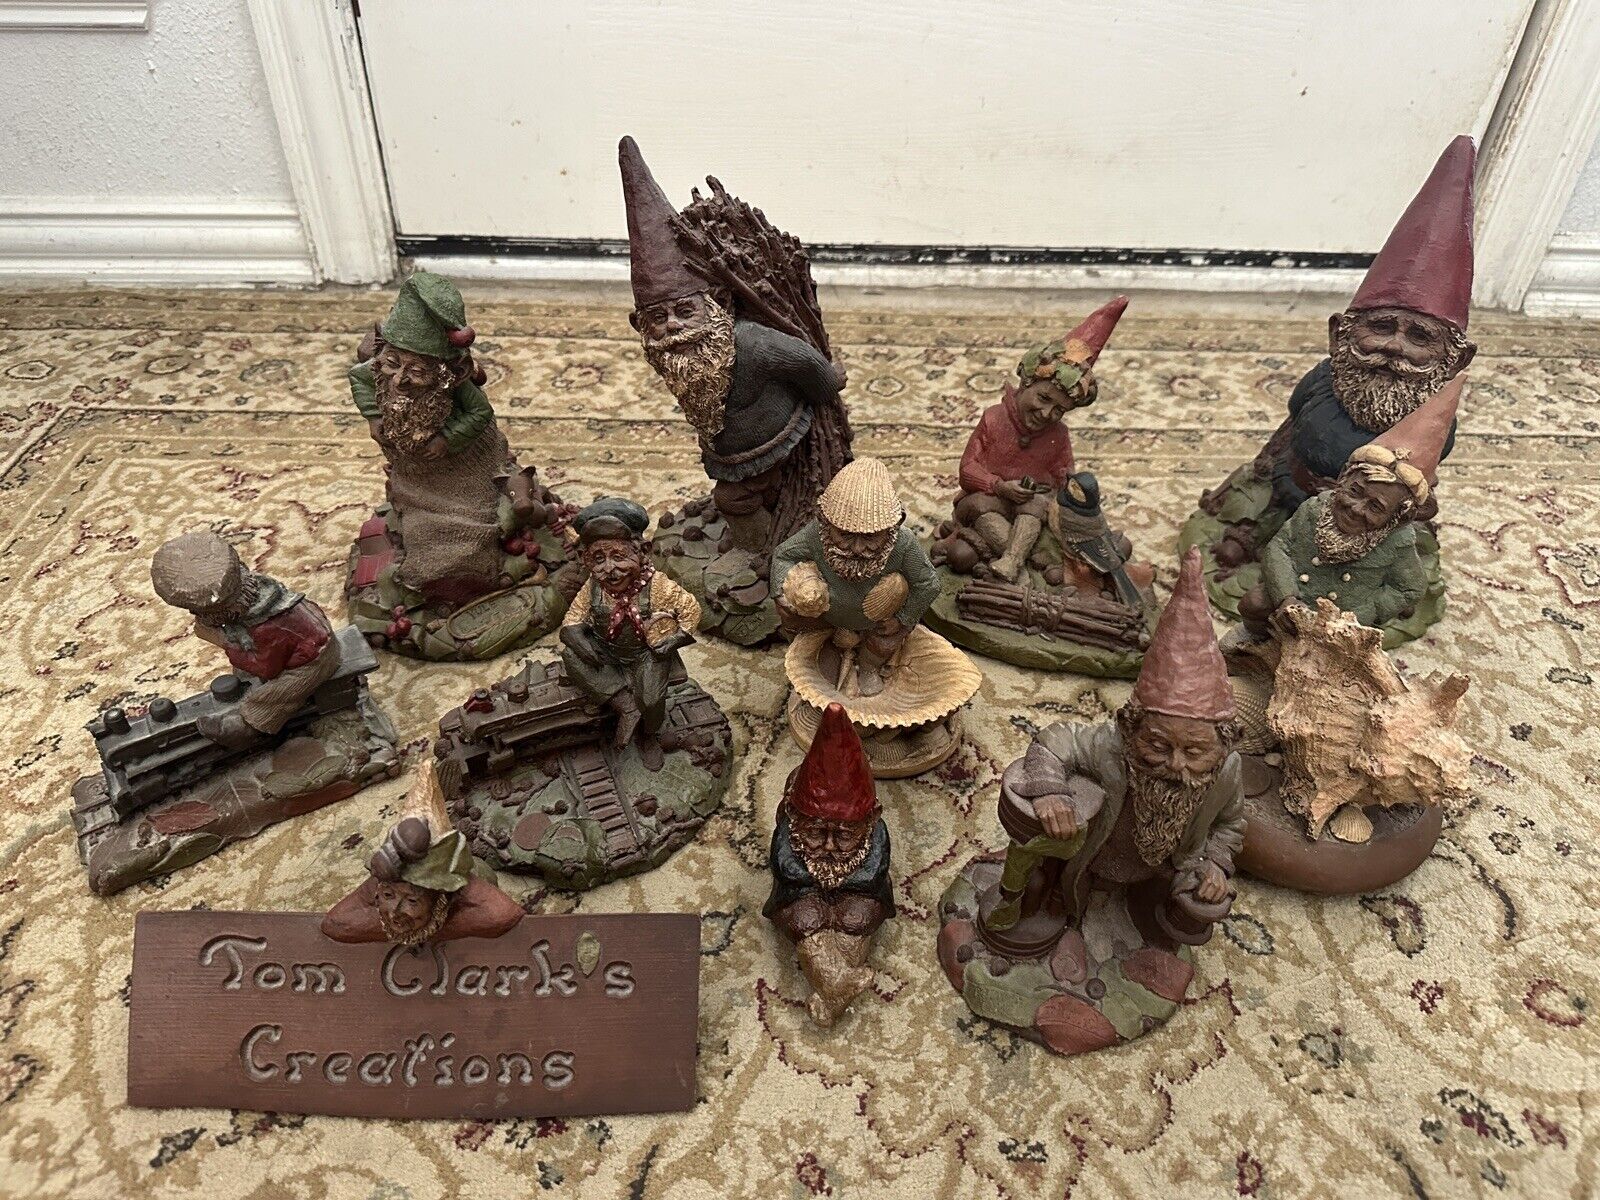 Lot of 10 Thomas Clark Gnome Figurines Plus Display Sign